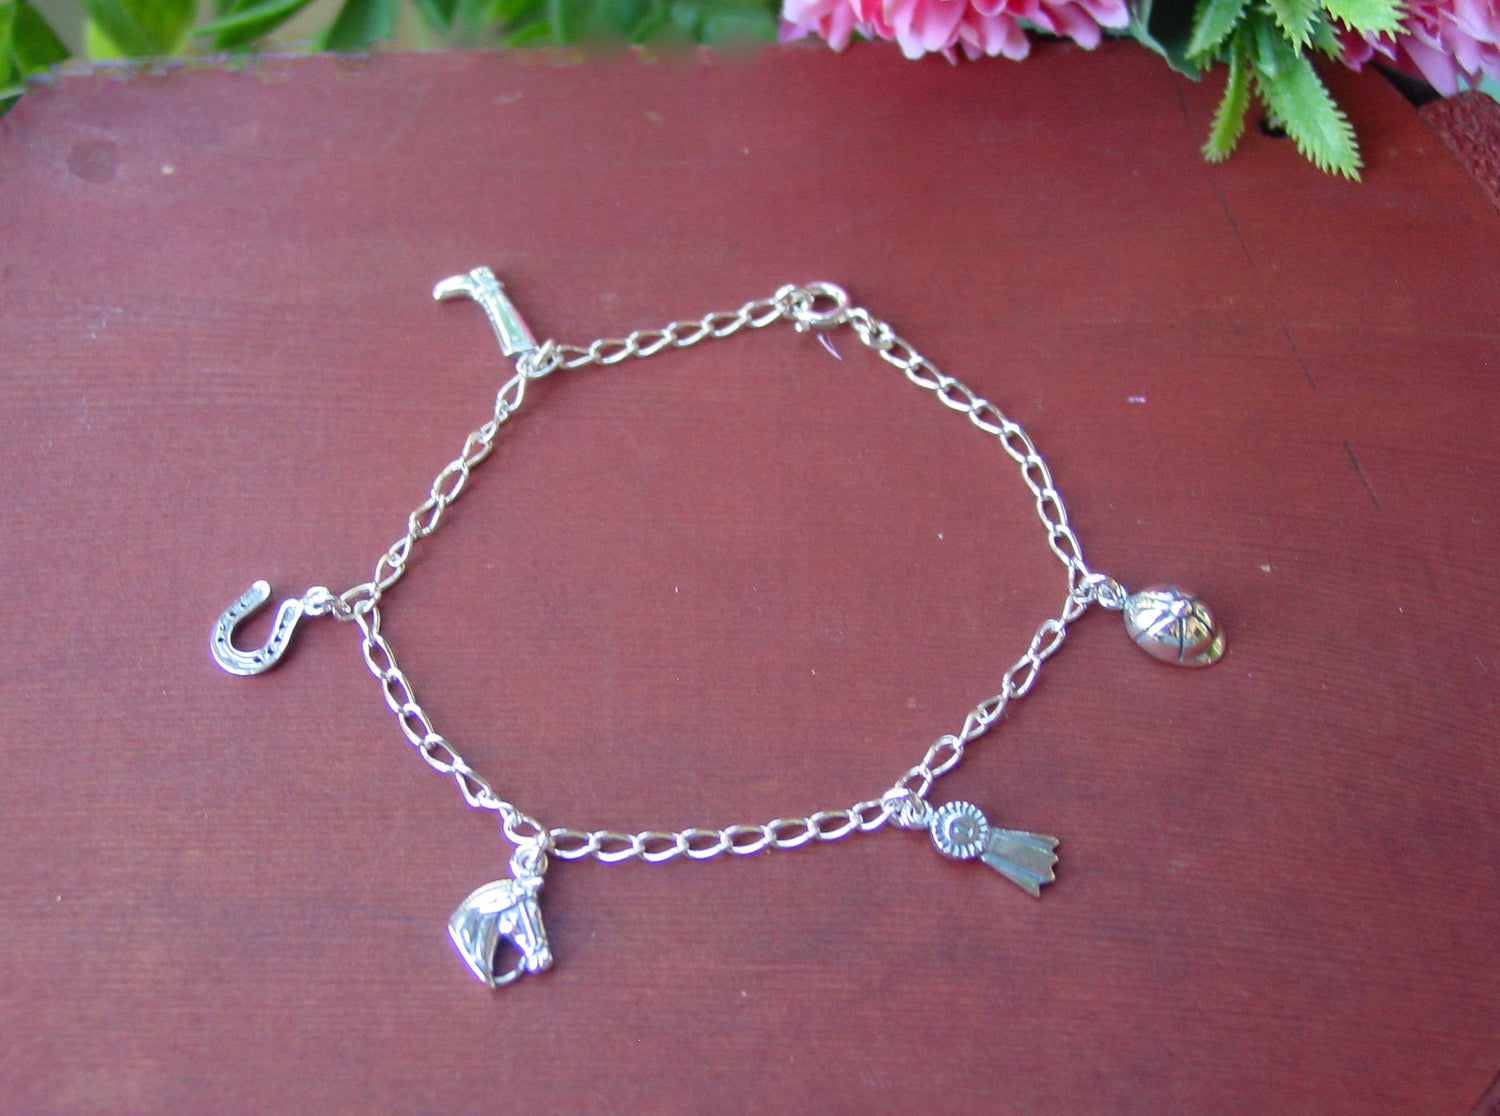 Equestrian Charm Bracelet Sterling Silver Jewelry, Horse Jewelry